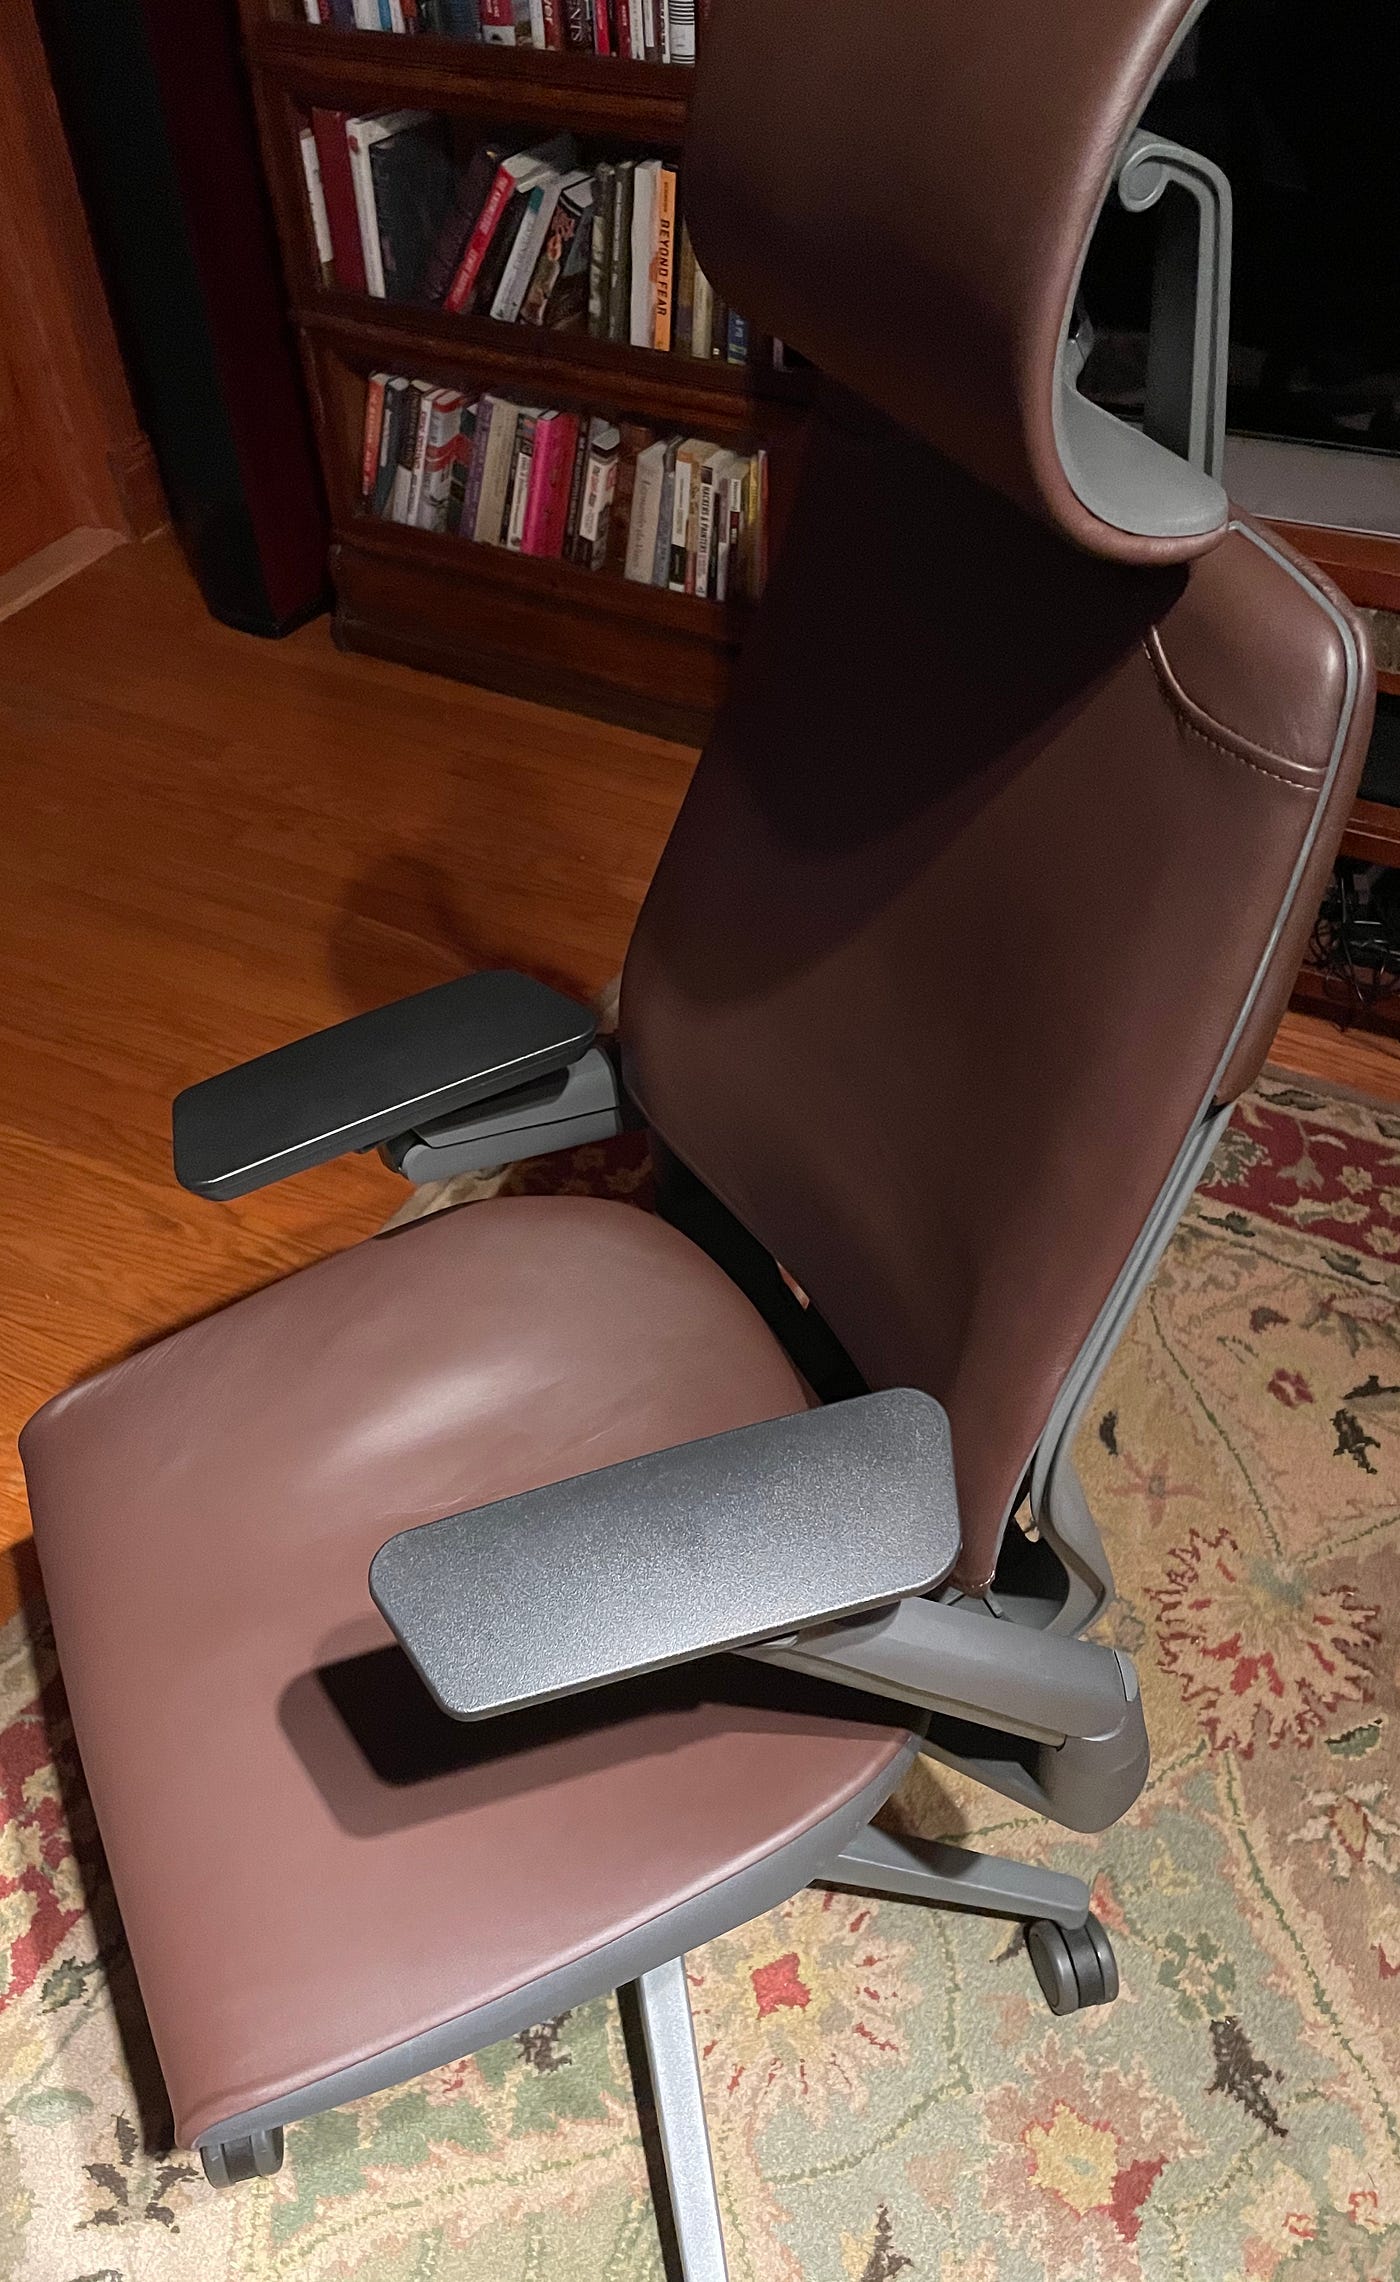  Steelcase Gesture Office Desk Chair with Headrest in